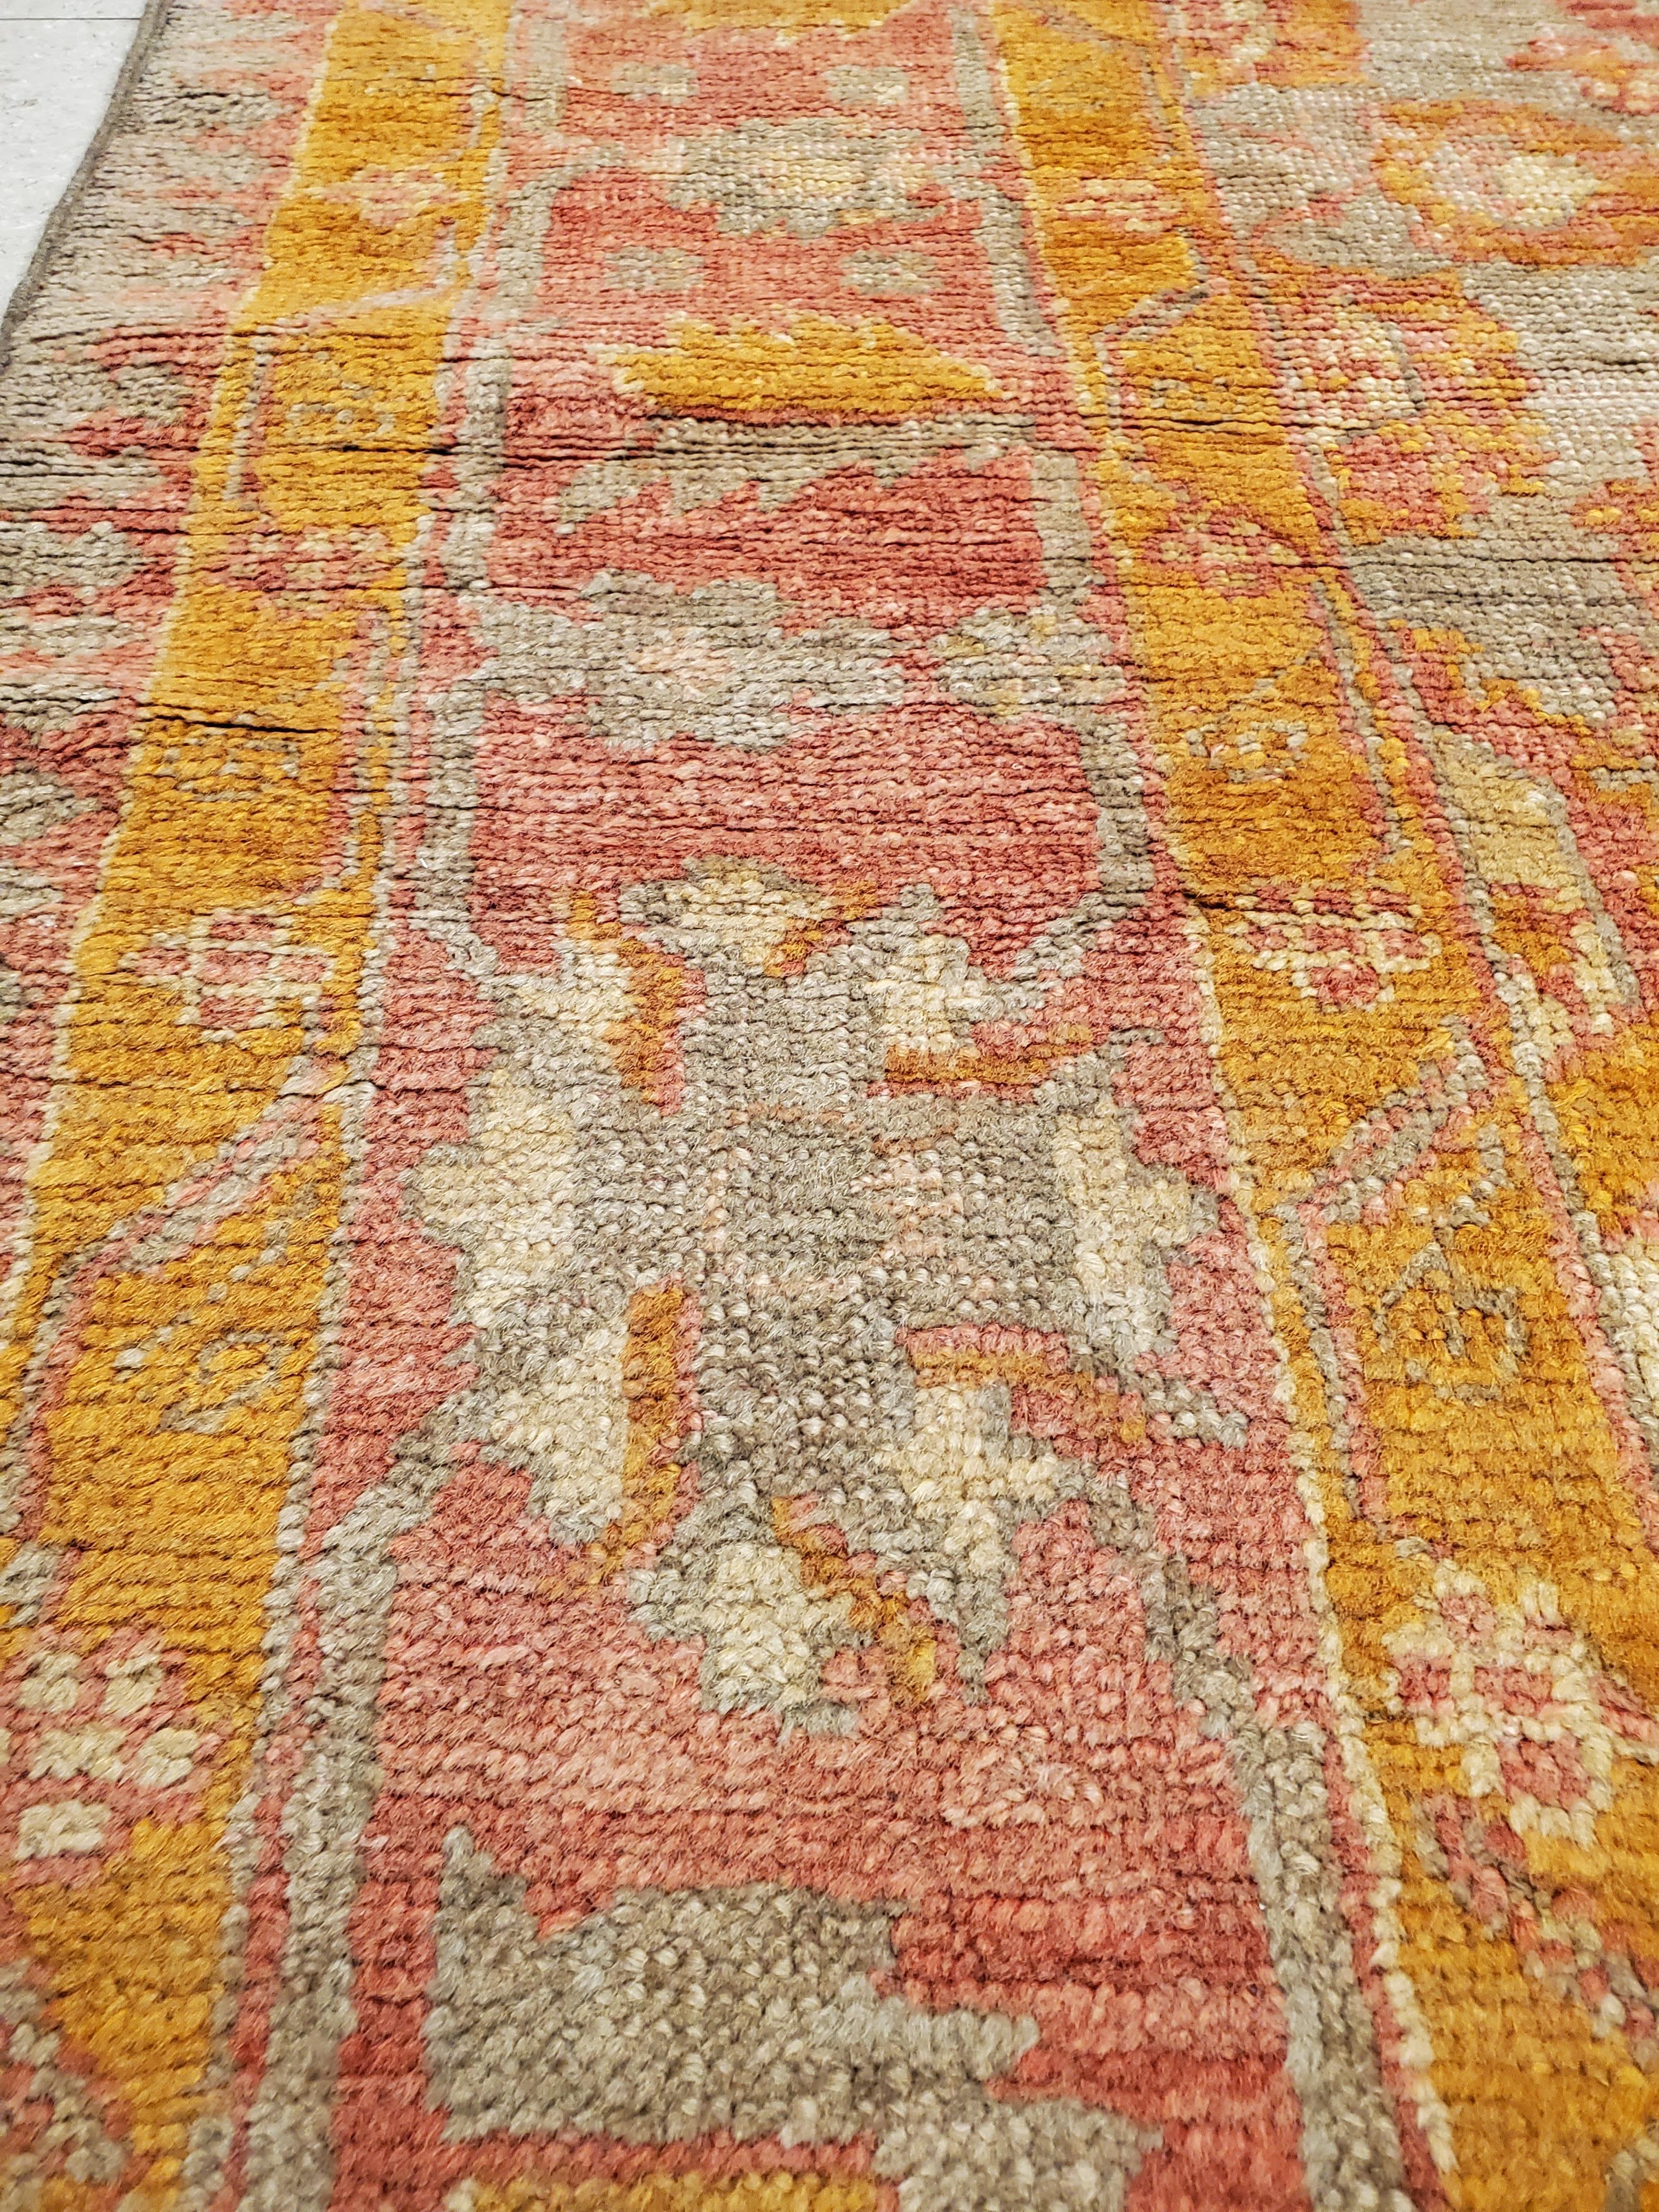 Wool Antique Oushak Carpet, Handmade Turkish Oriental Rug, Saffron, Coral, Light Blue For Sale